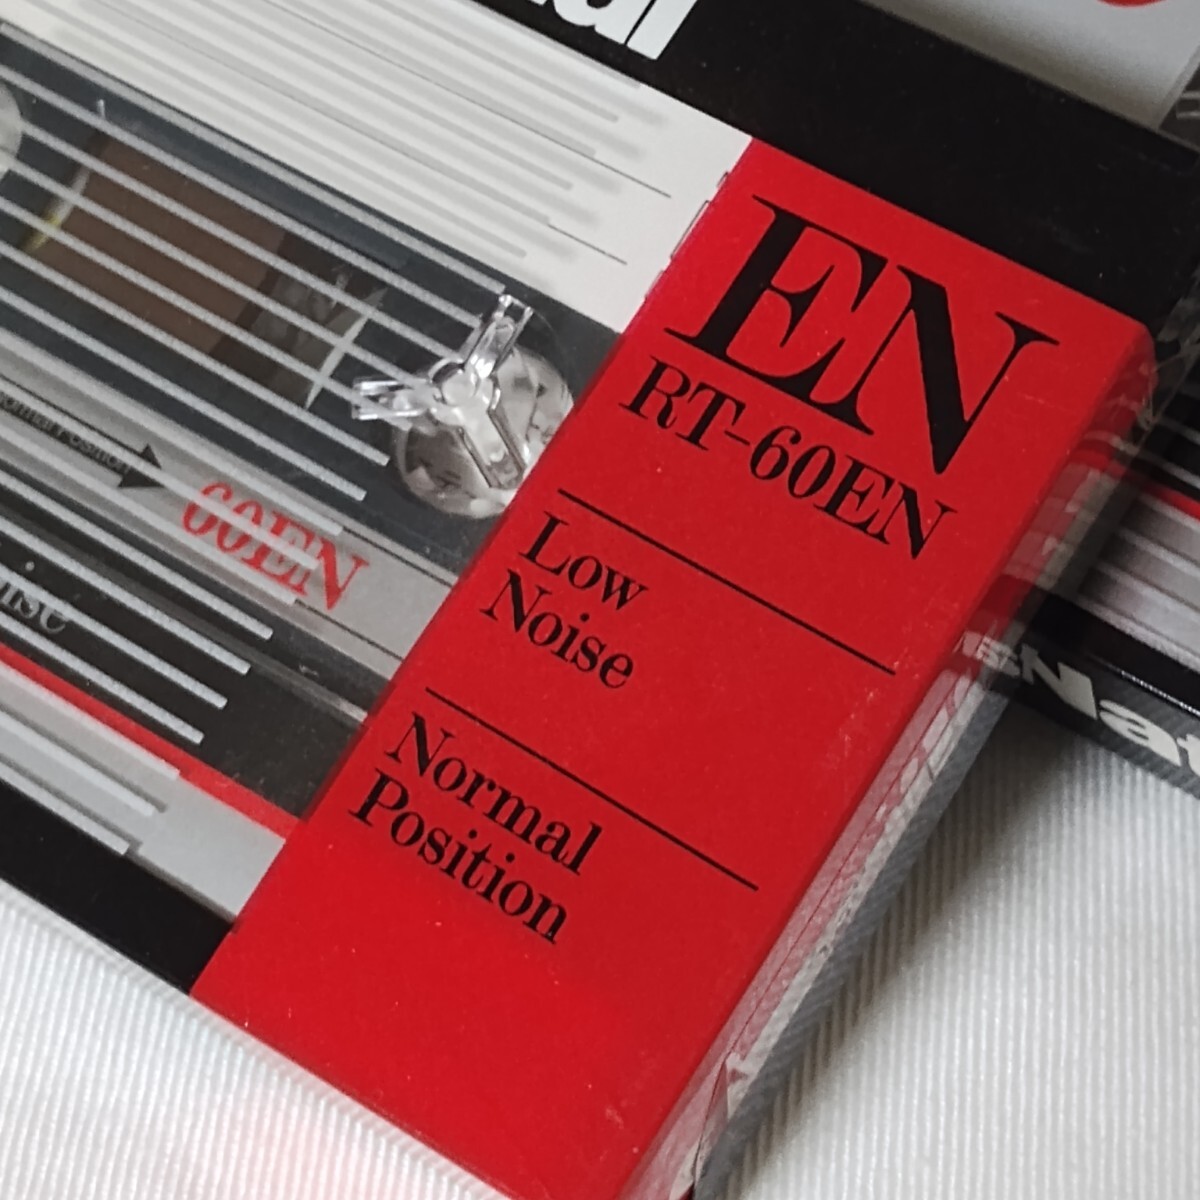 national【ナショナル】 松下電気 RT-60EN ノーマルポジション カセットテープ4本セット【未開封】の画像2